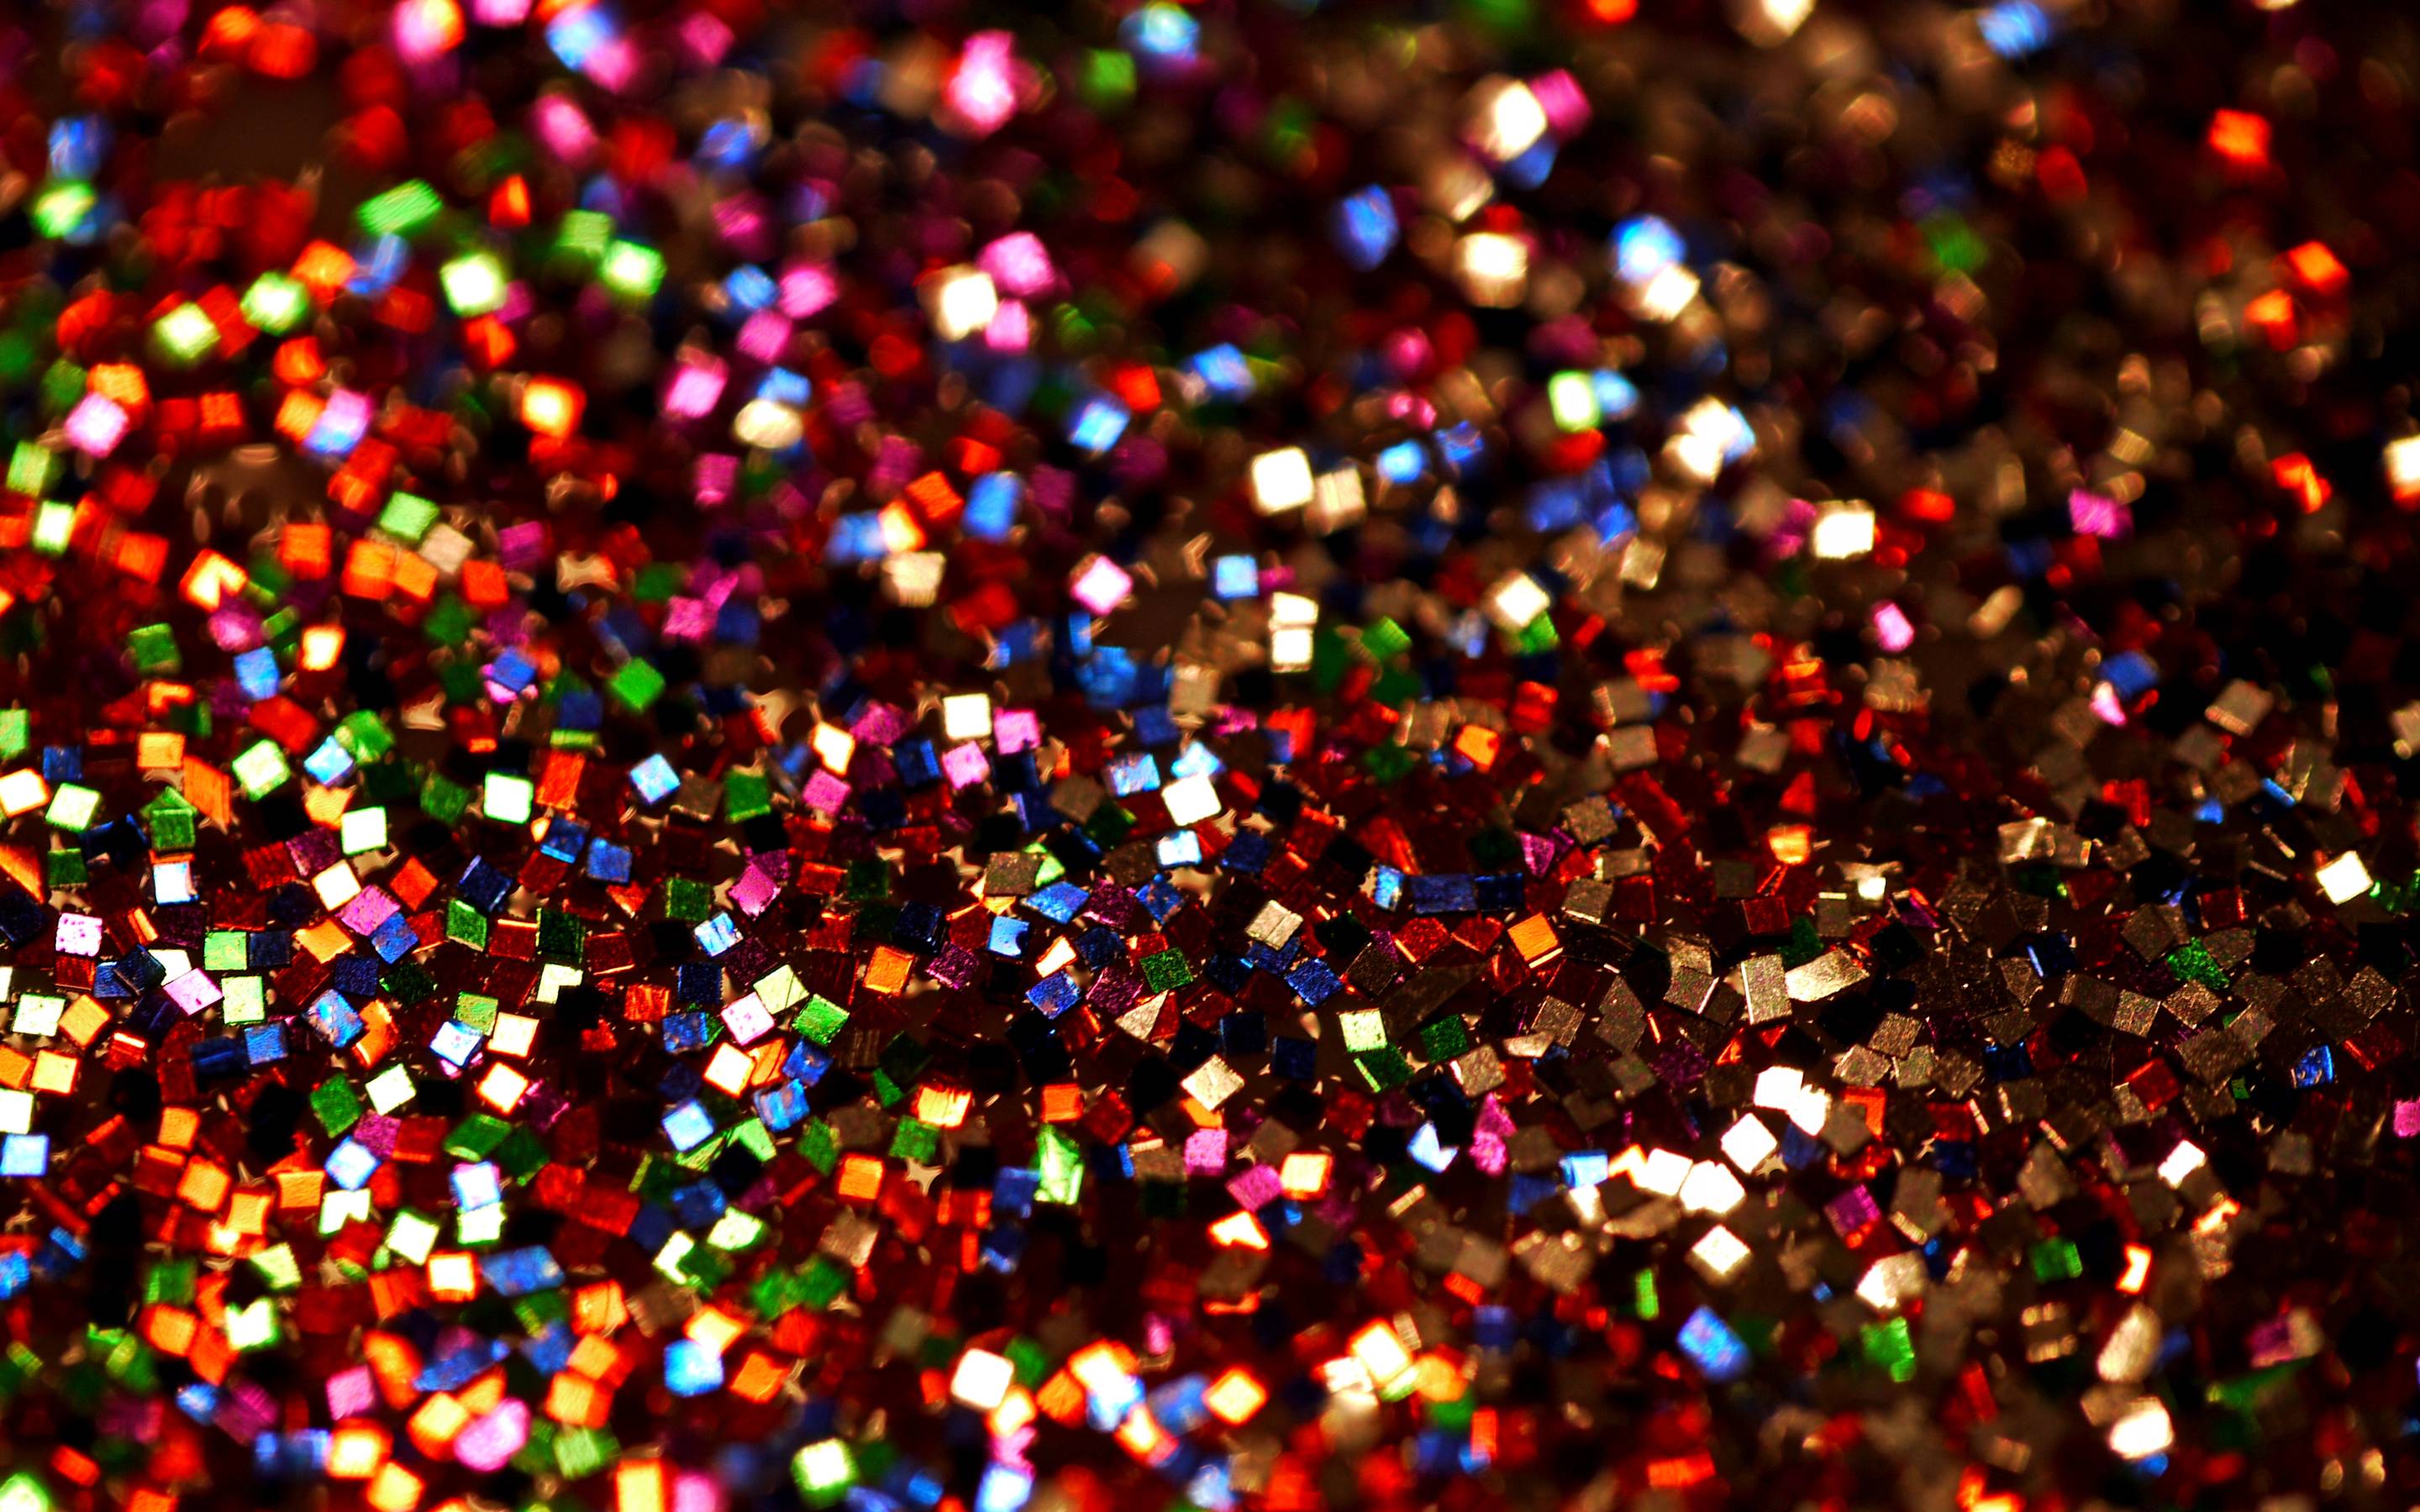 Glittery Reddish Sparkles 310342 Image HD Wallpaper. Wallfoy.com